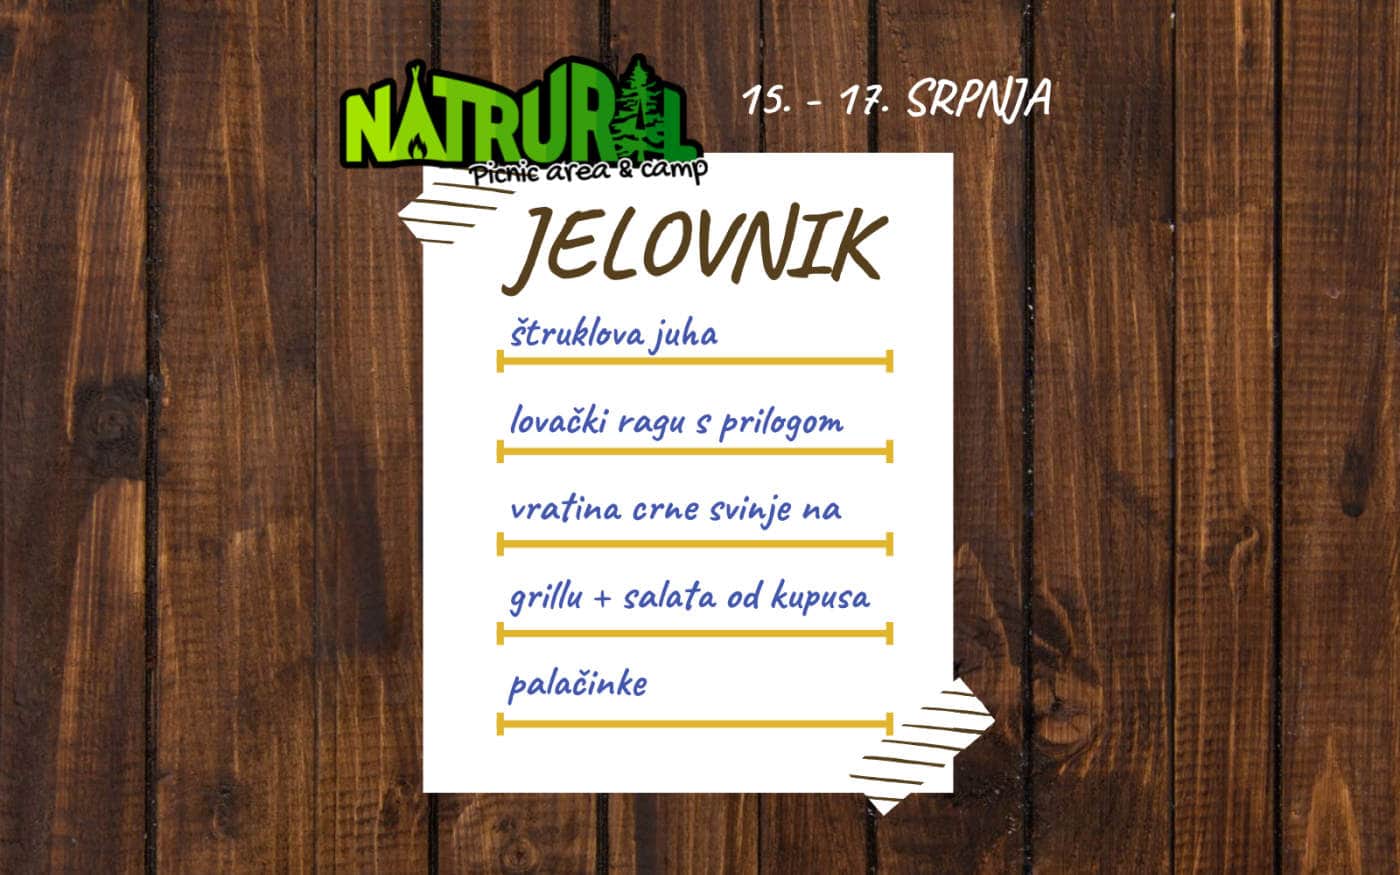 Restoran Natrural Žumberak - Jelovnik, 15. - 17. srpnja 2022.